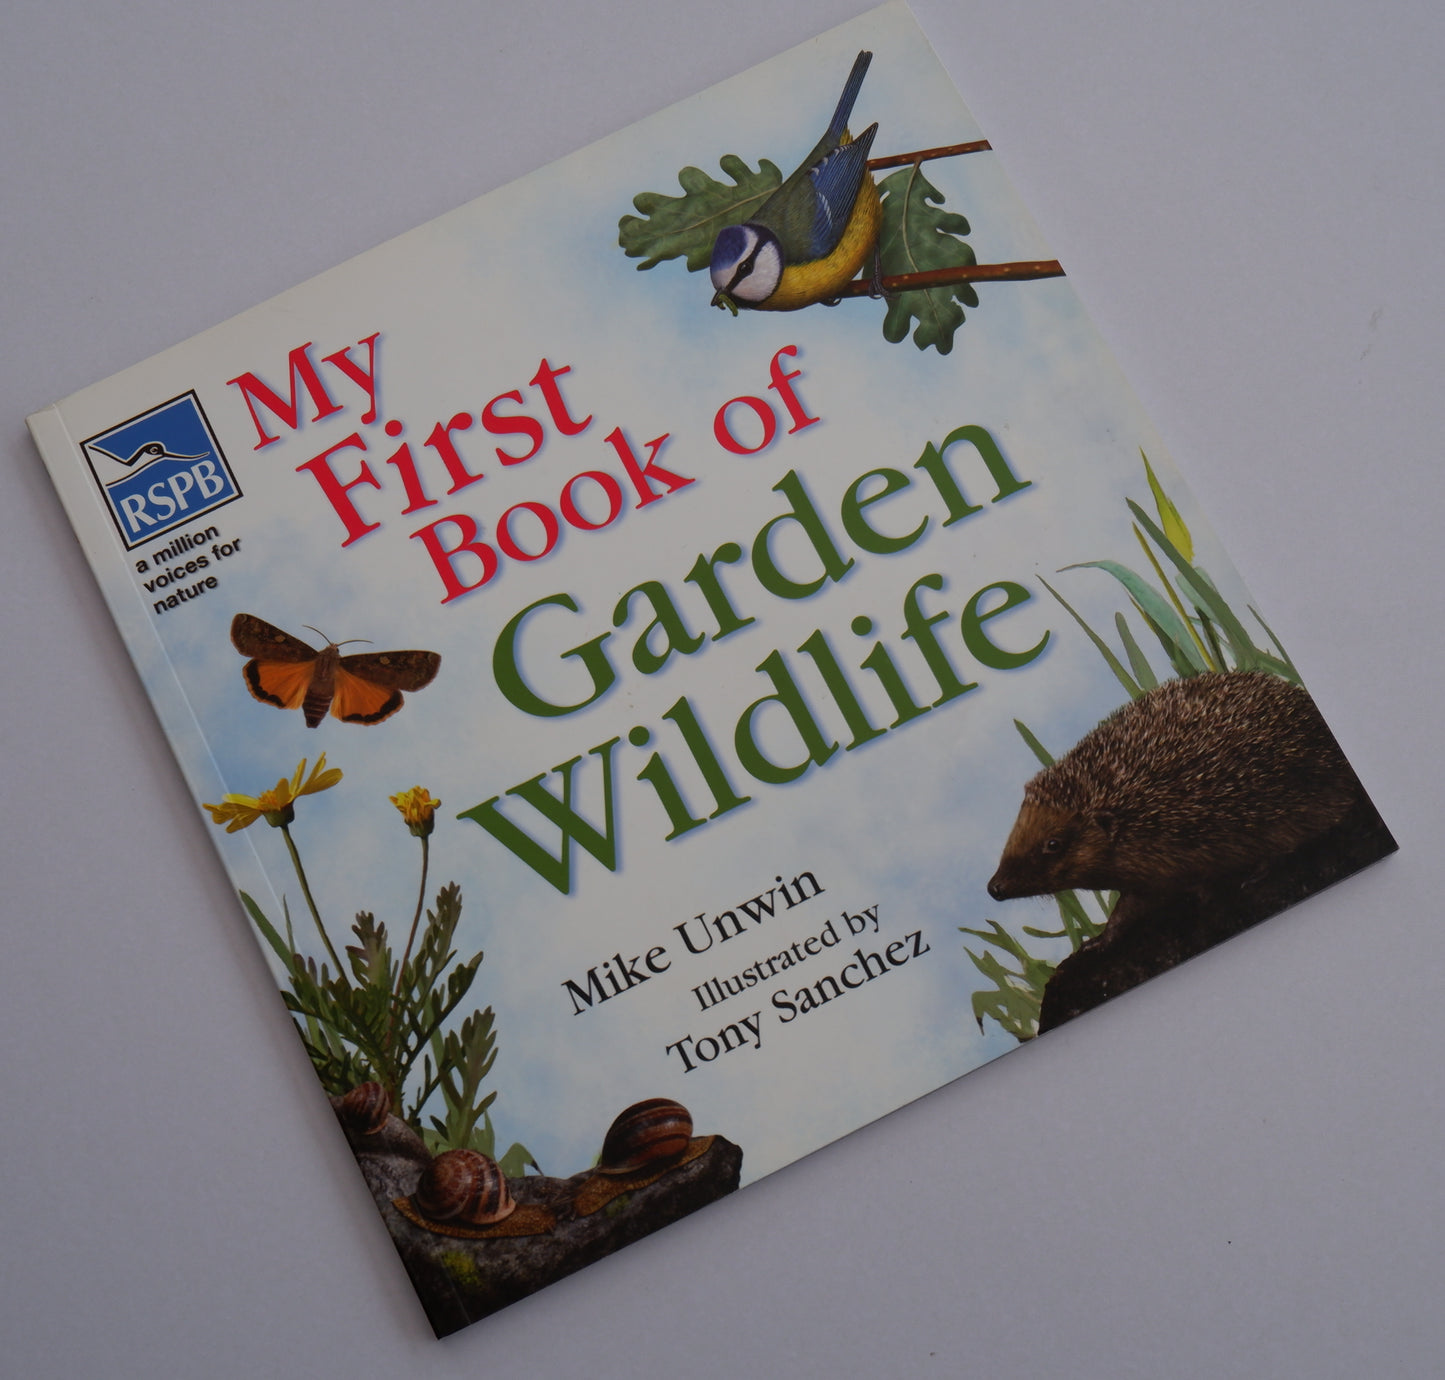 RSPB My First Book of Garden Wildlife - Mike Unwin